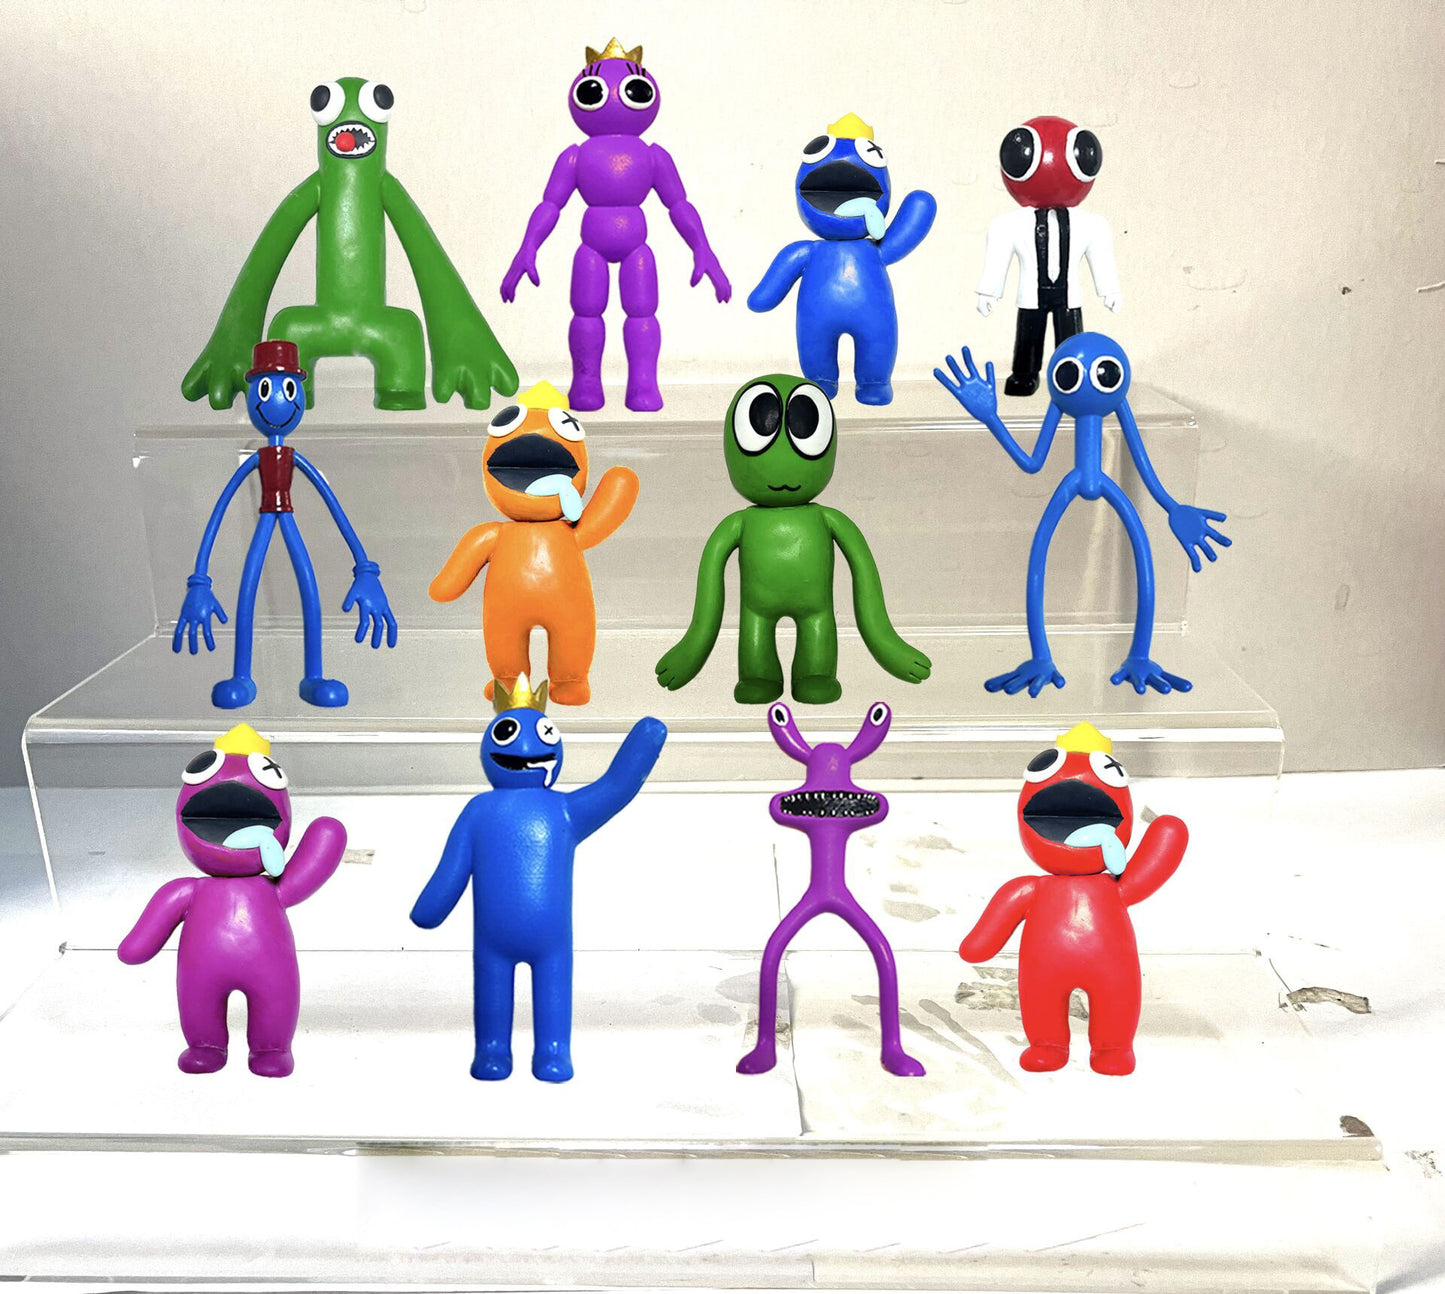 Figurines - Rainbow Friends